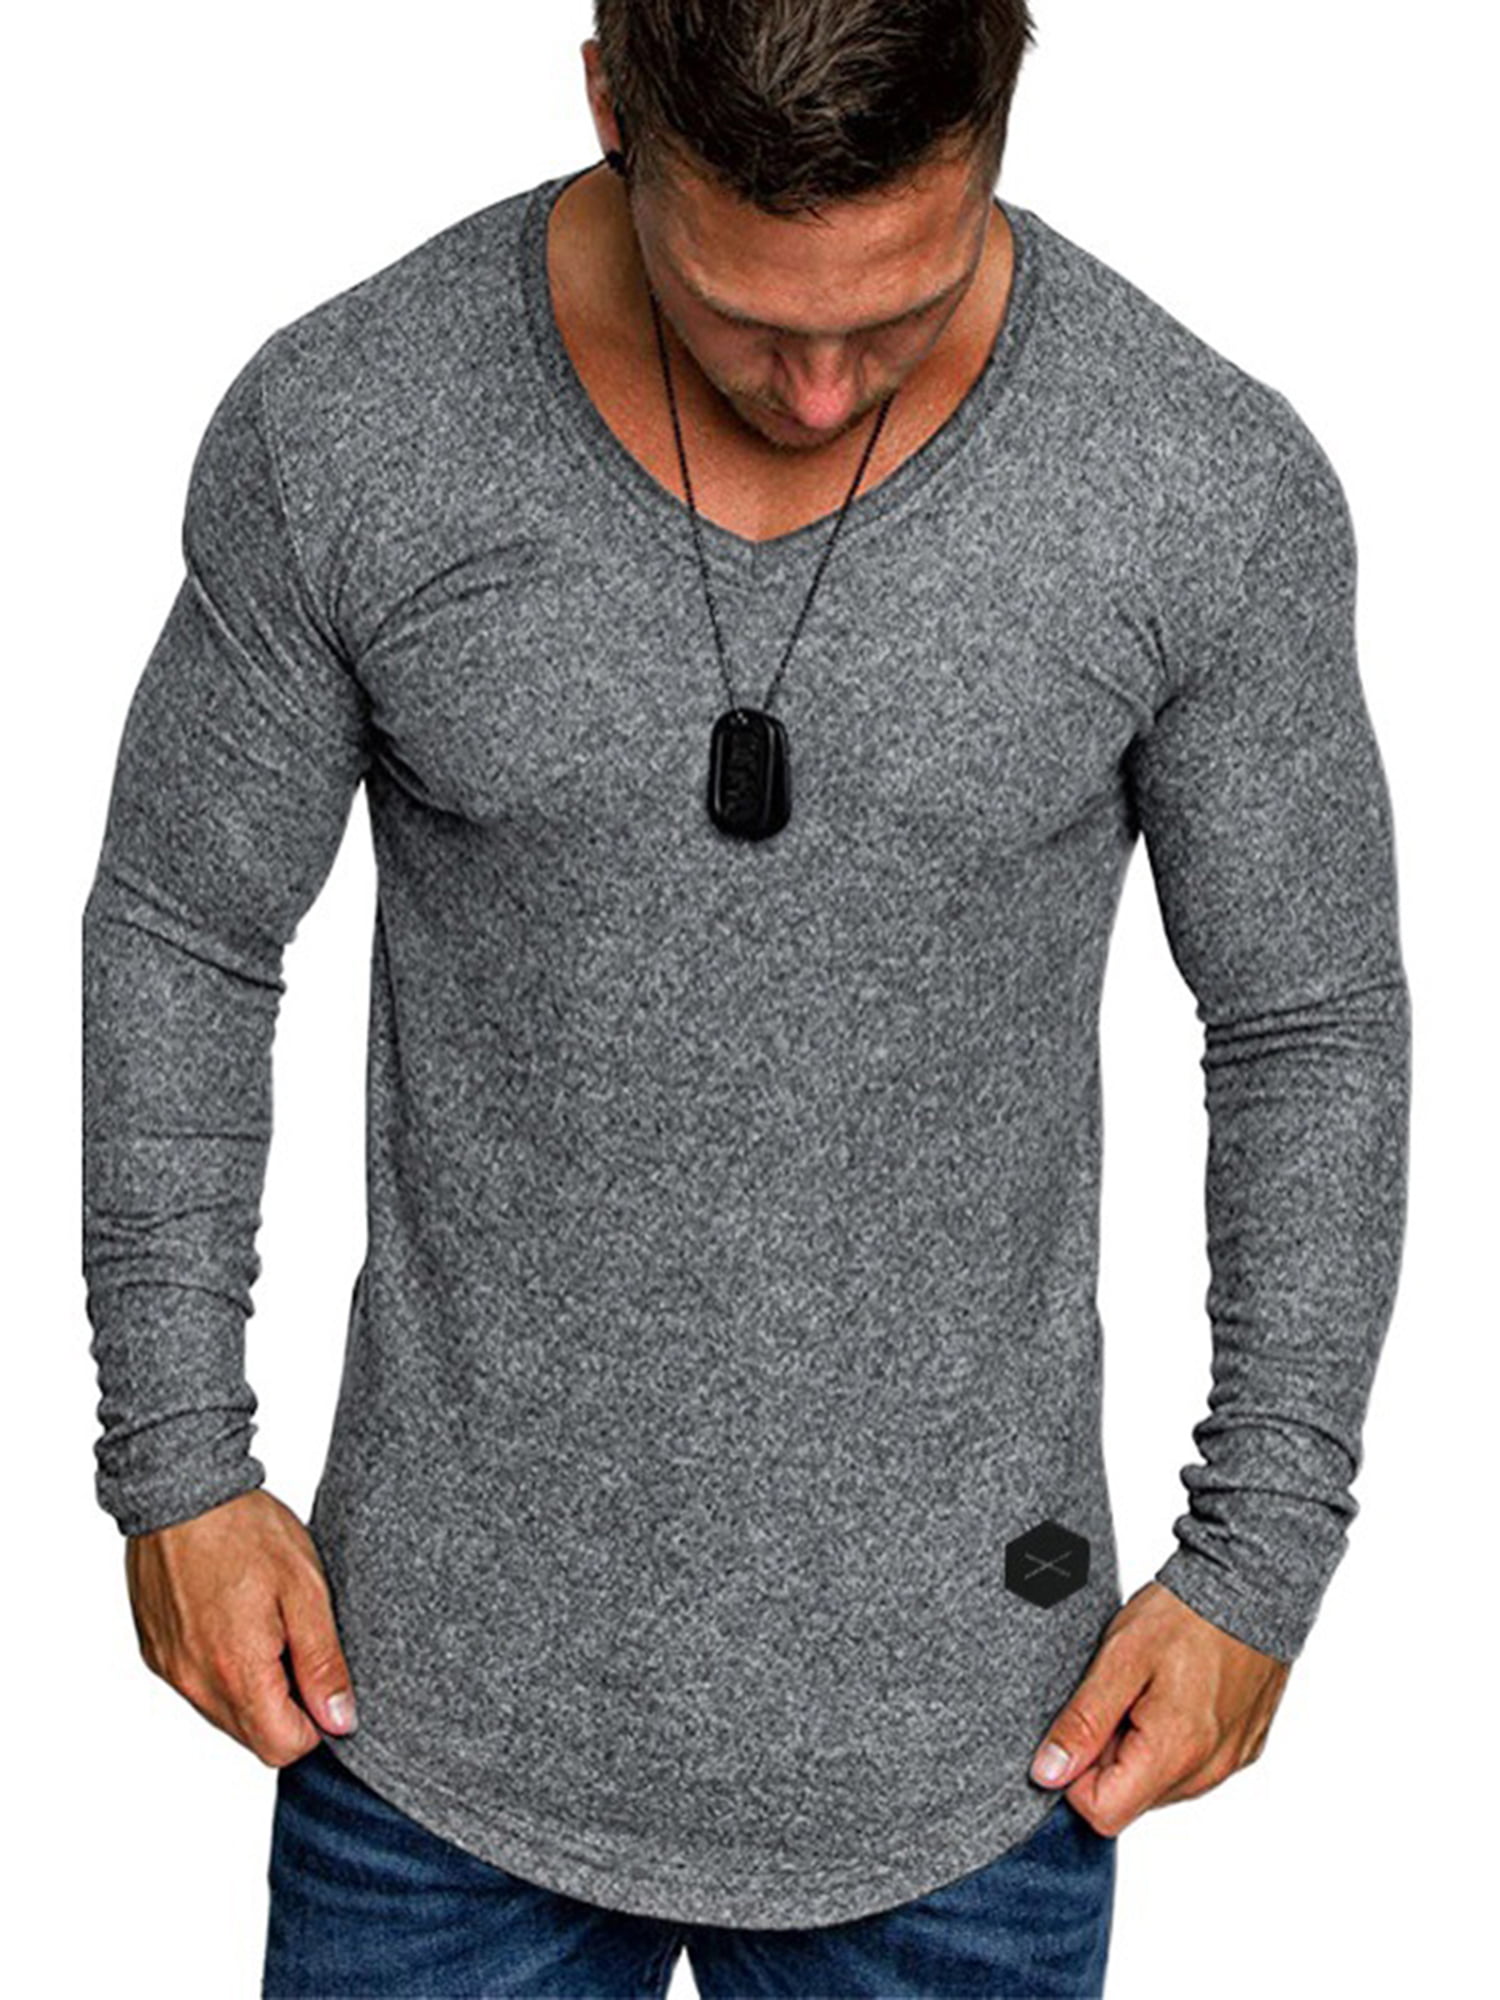 Men's fashion new US hooded irregular T-shirt tops size CN M L XL black or white 